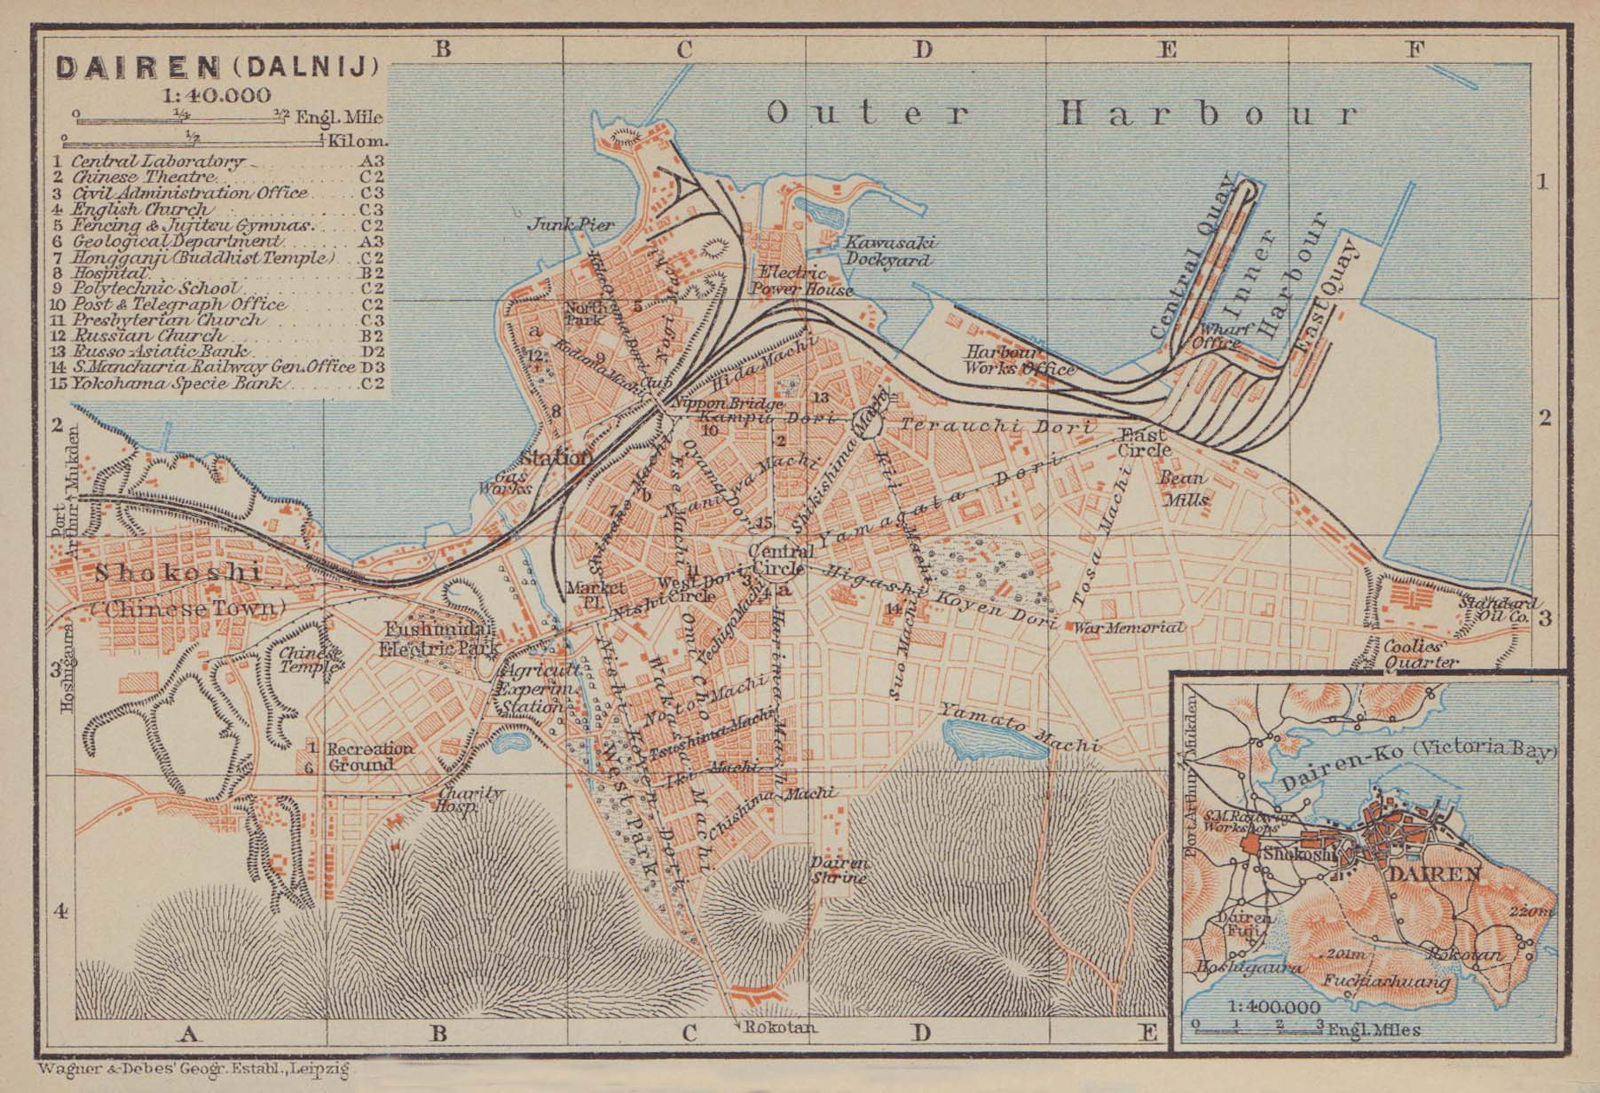 Dalian (Dairen/Dalniy) town/city plan. China. BAEDEKER 1914 old antique map